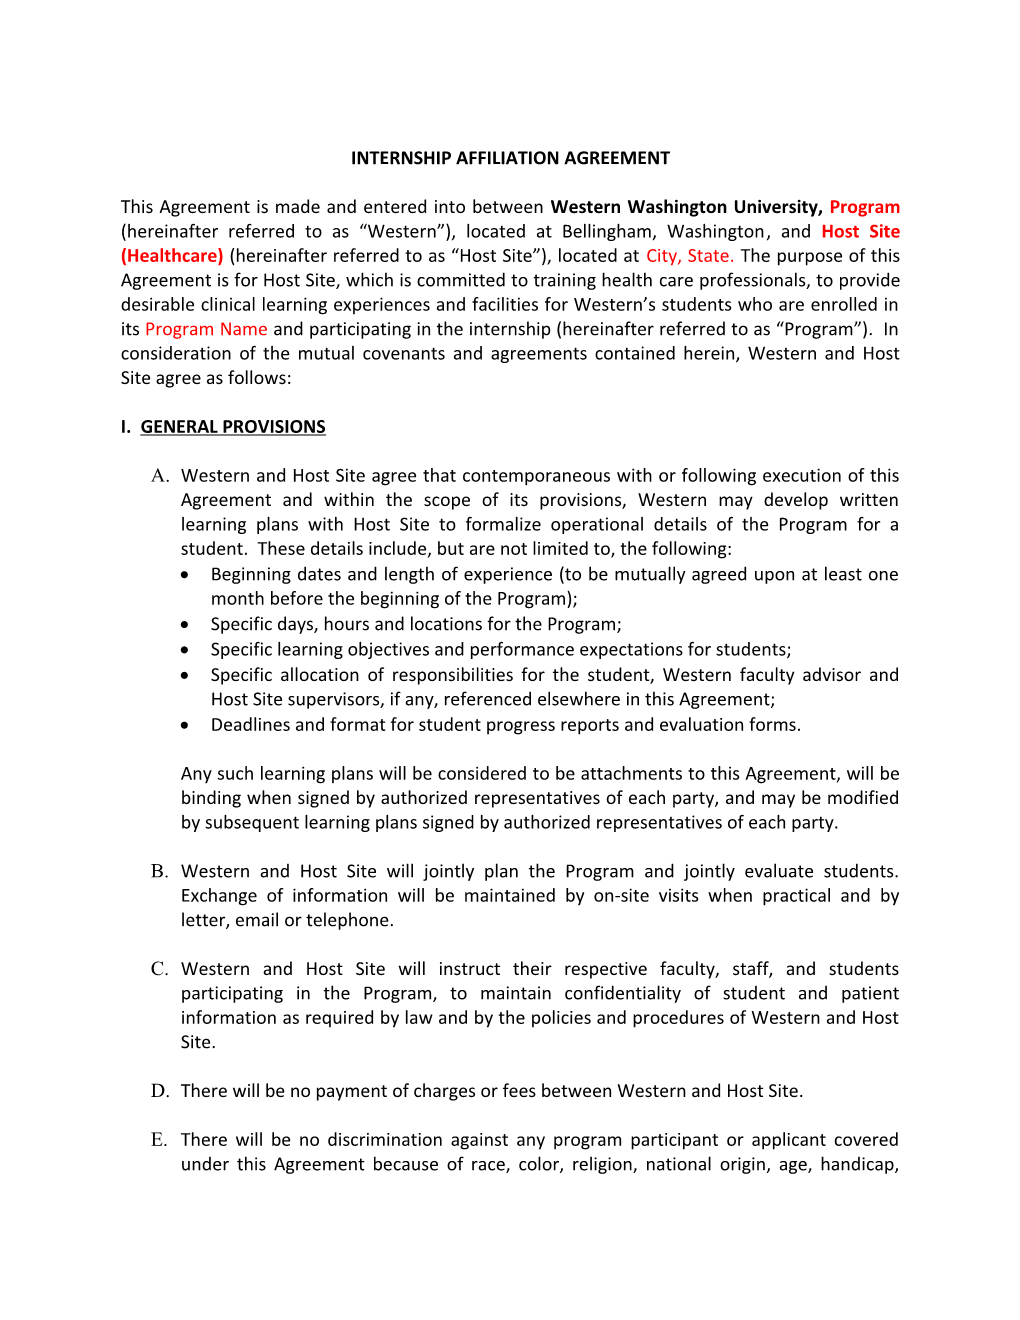 Model/Standard Clinical Affiliation Agreement - Non-UW Affiliates